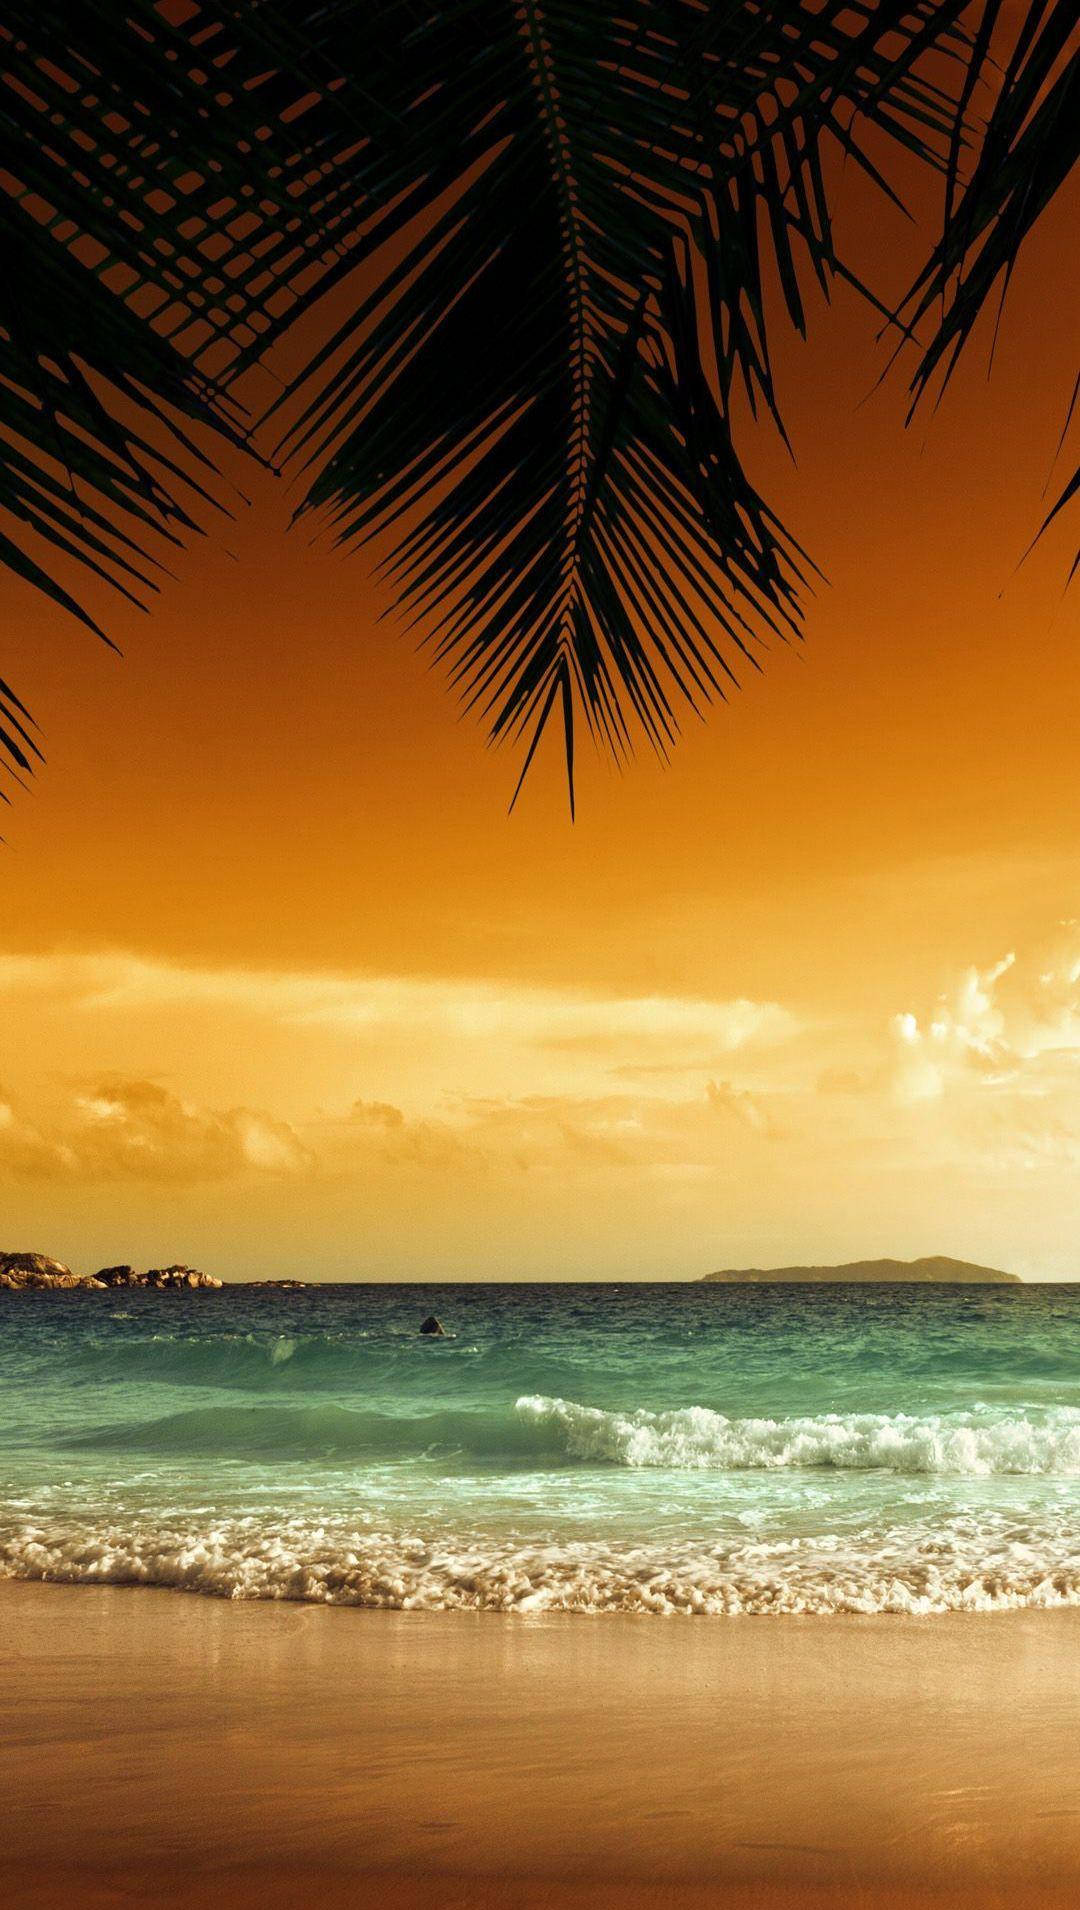 4k Iphone Coconut Leaves Sunset Beach Wallpaper